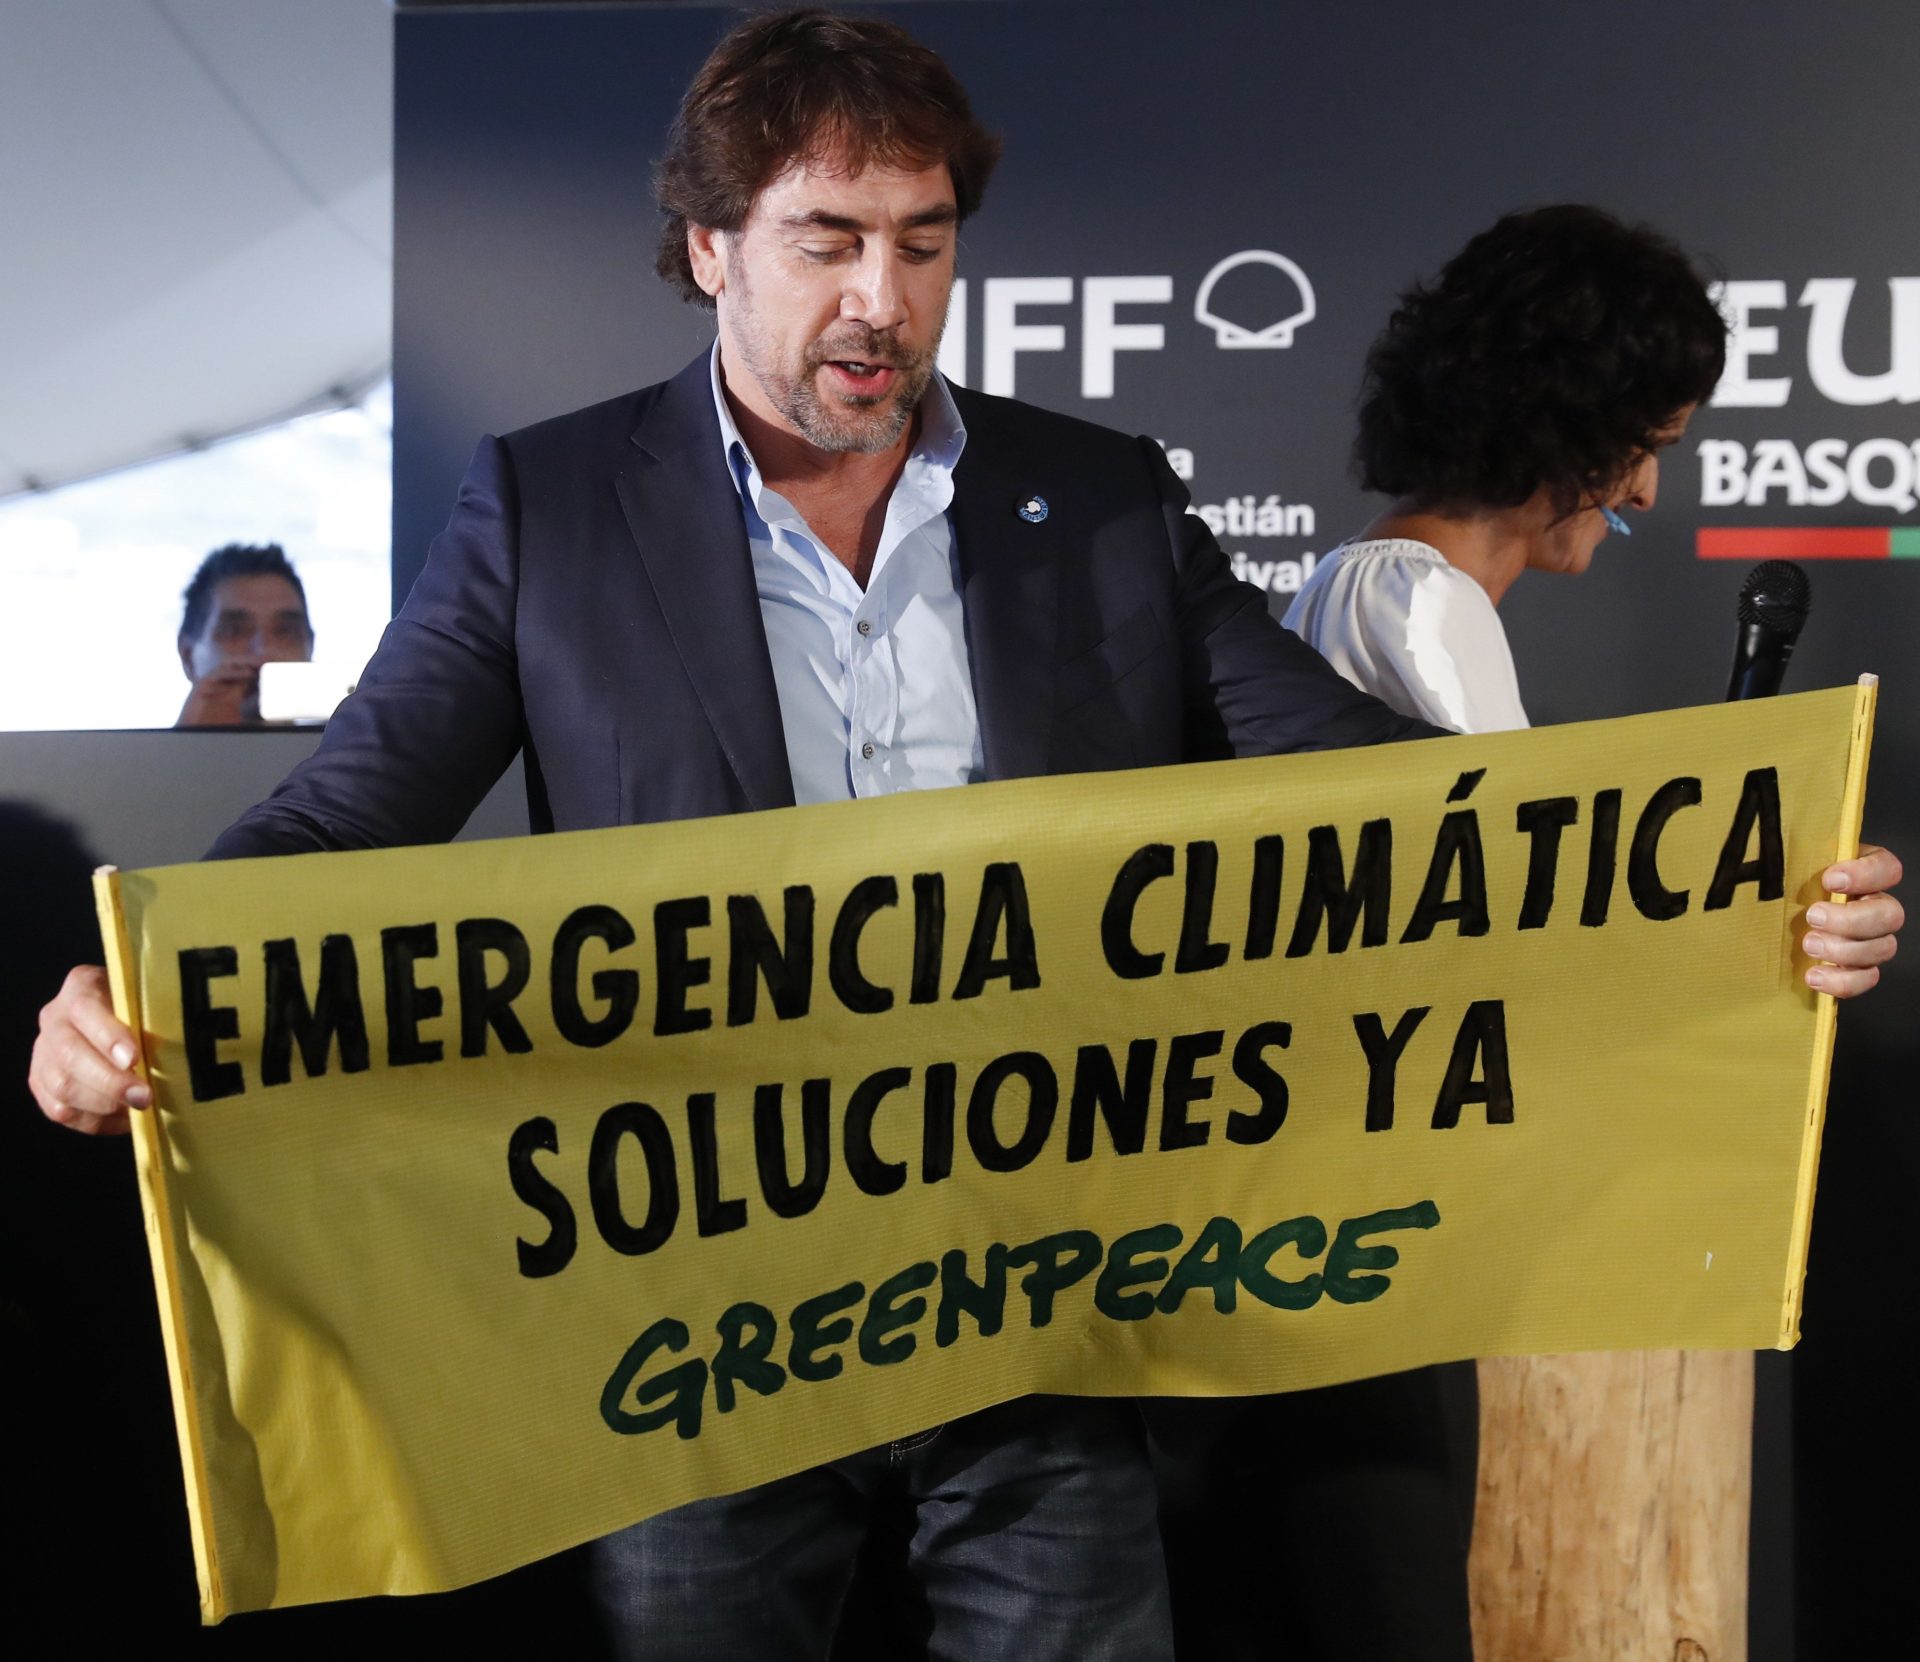 Premio Lurra de Greenpeace en el 67 Festival de San Sebastián